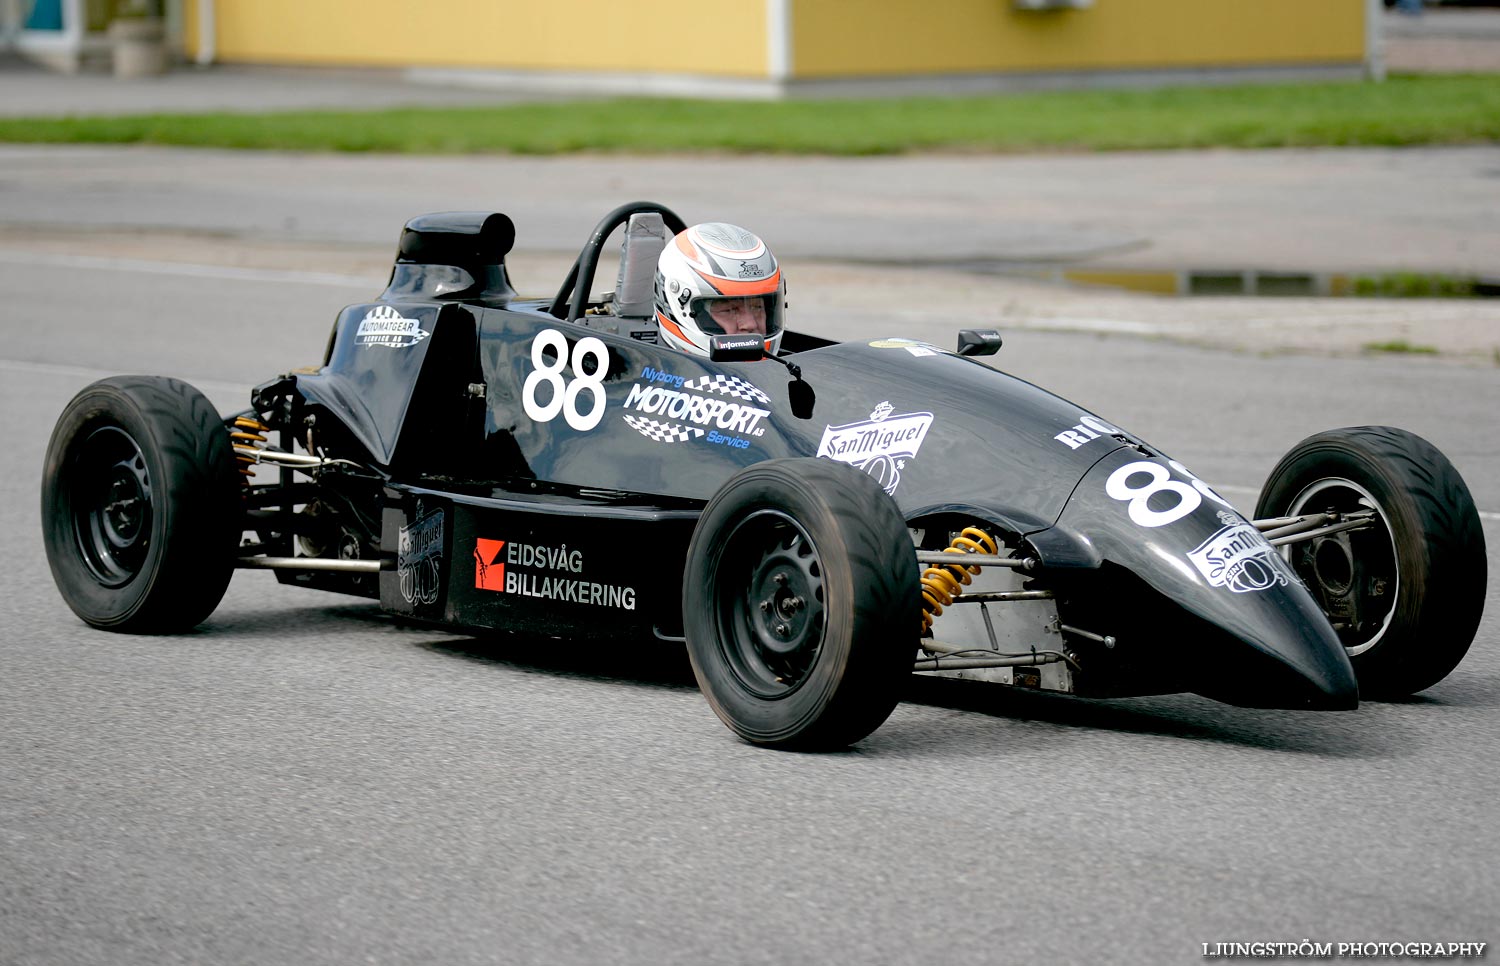 SSK Raceweek,mix,Kinnekulle Ring,Götene,Sverige,Motorsport,,2009,107611